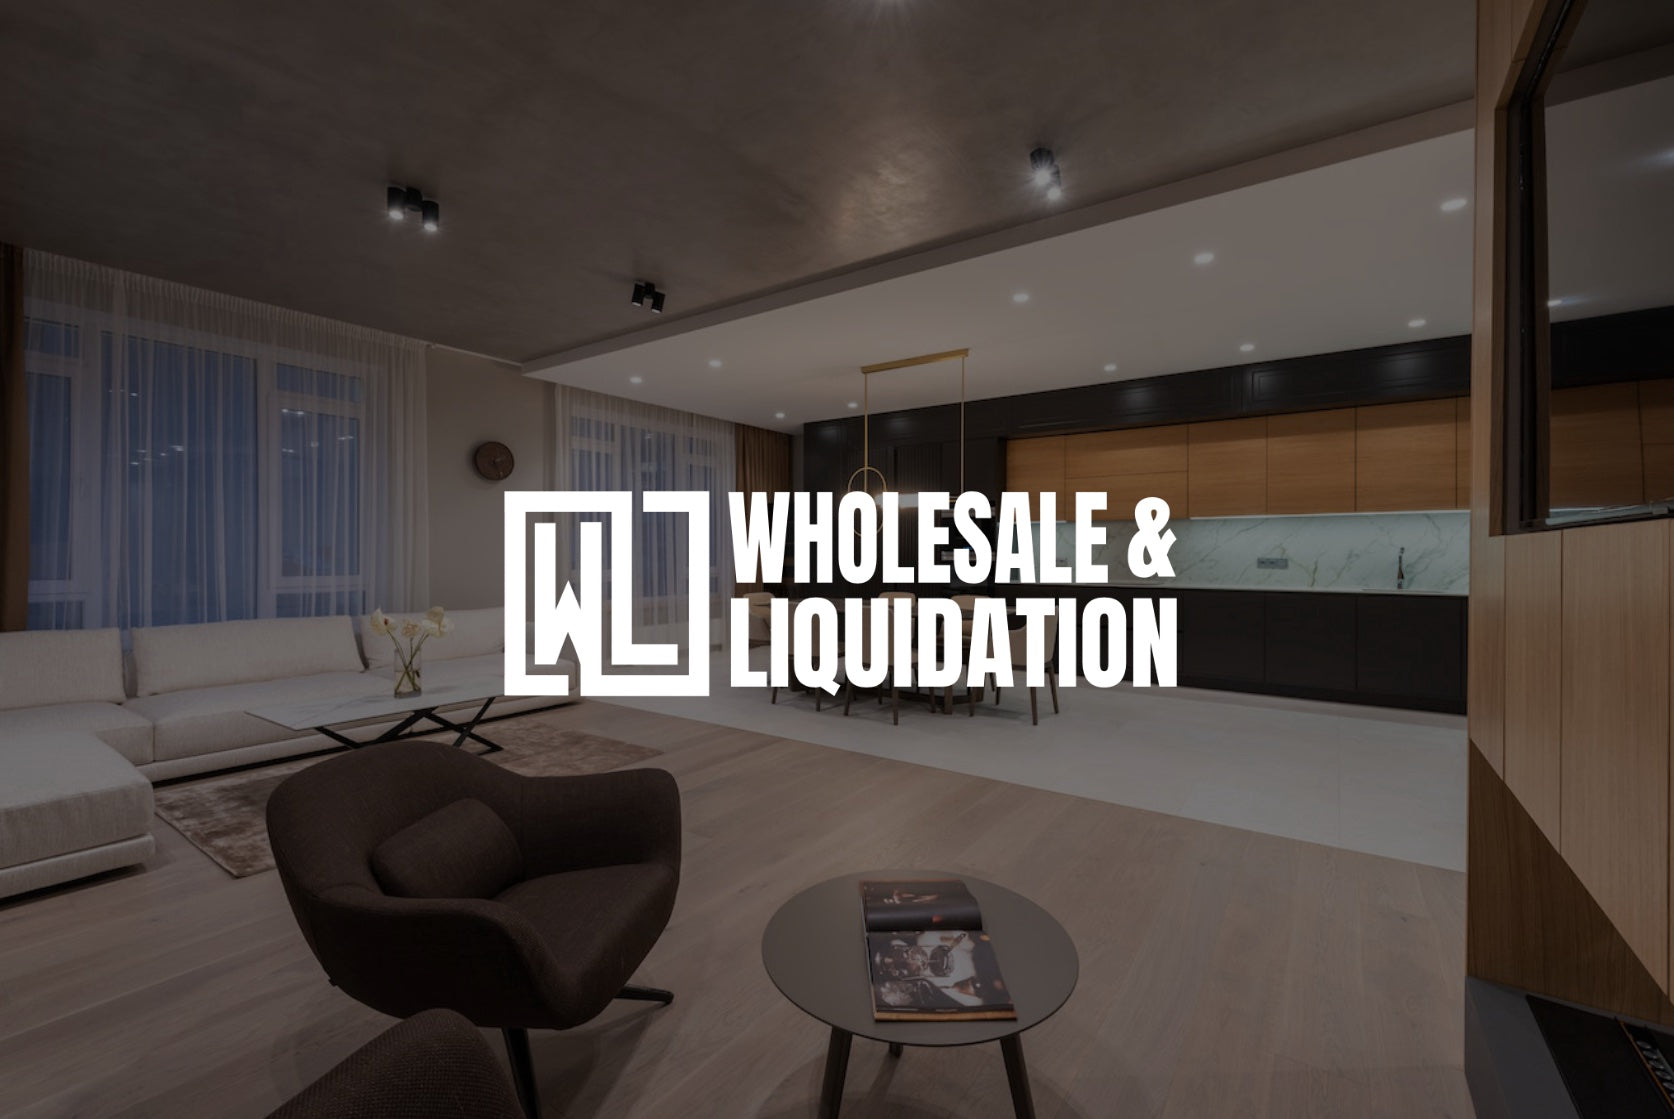 Wholesale and Liquidation
– A and J Liquidation
